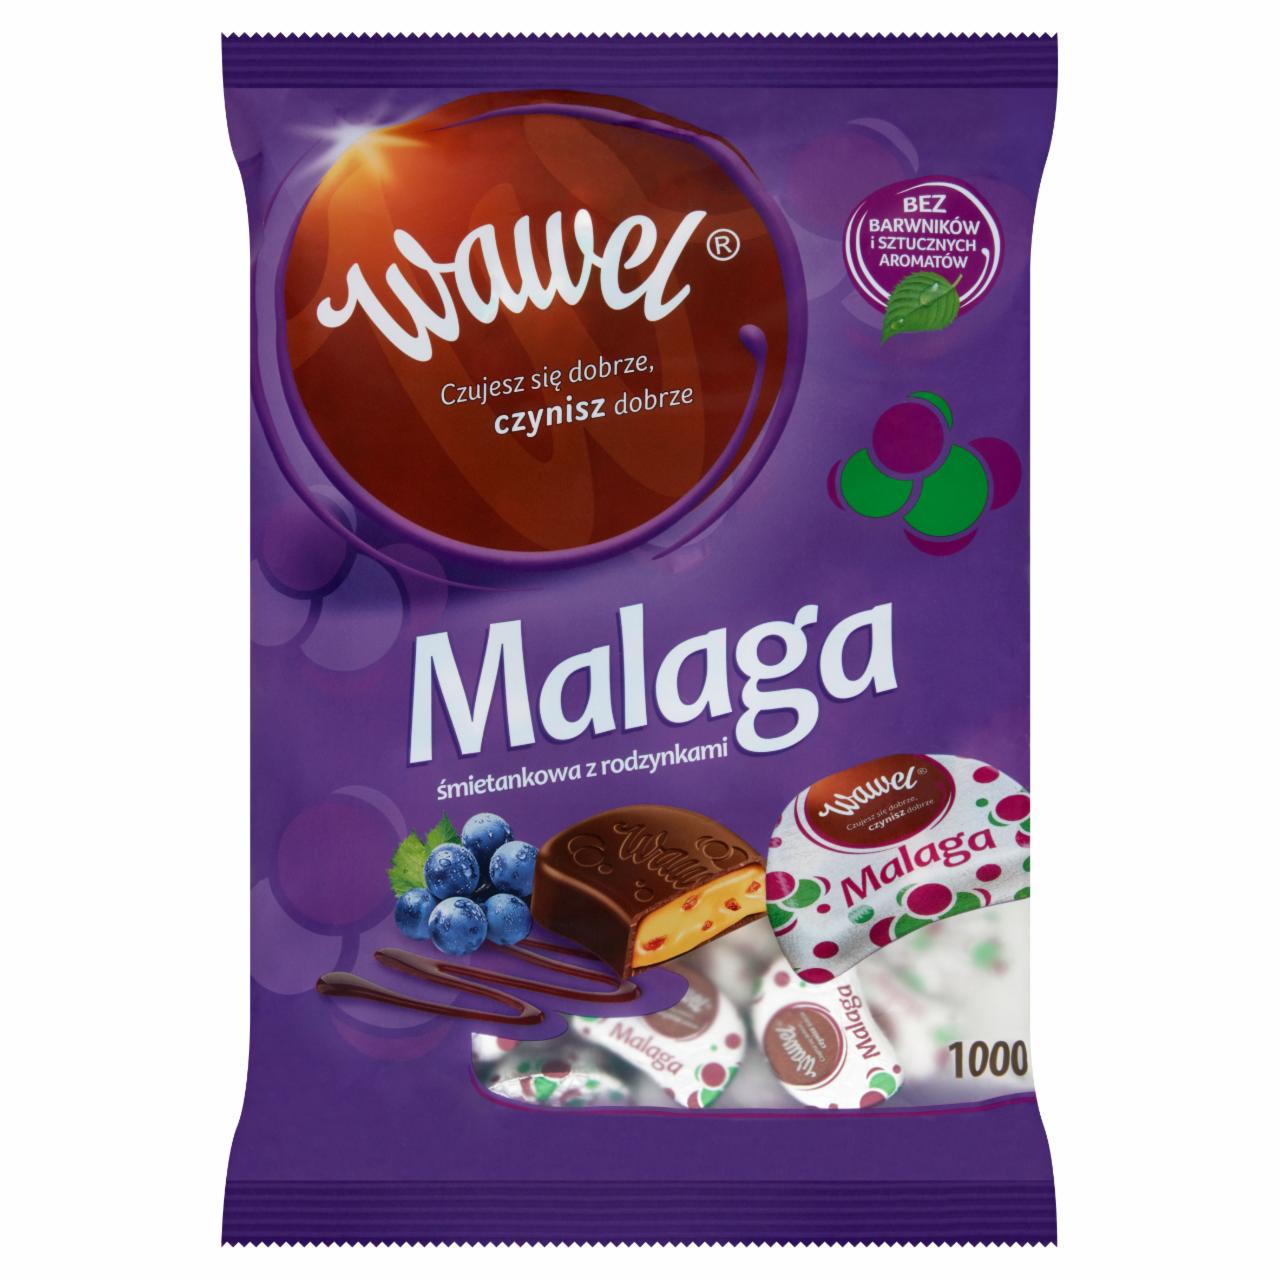 Photo - Wawel Malaga Cream with Raisins Filled Chocolate 1000 g